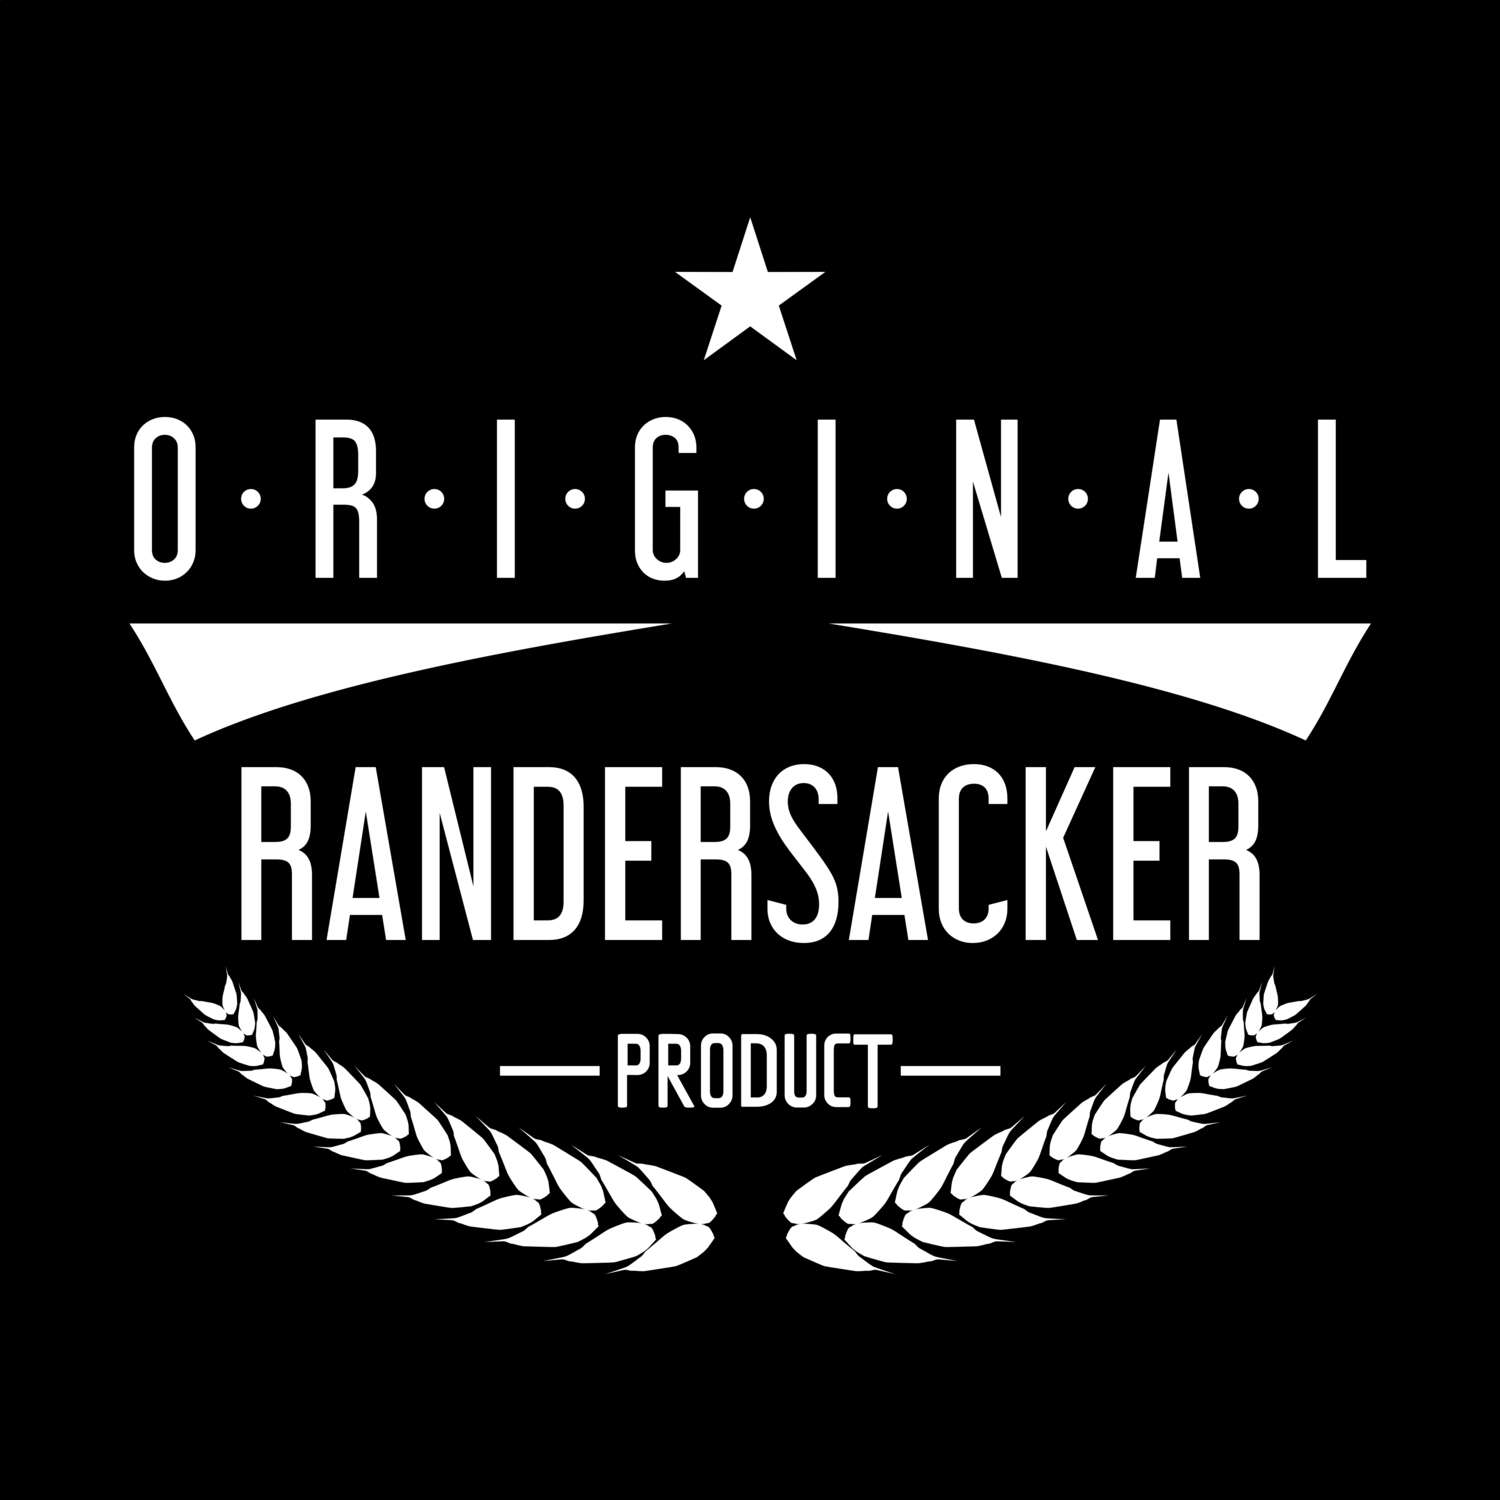 Randersacker T-Shirt »Original Product«